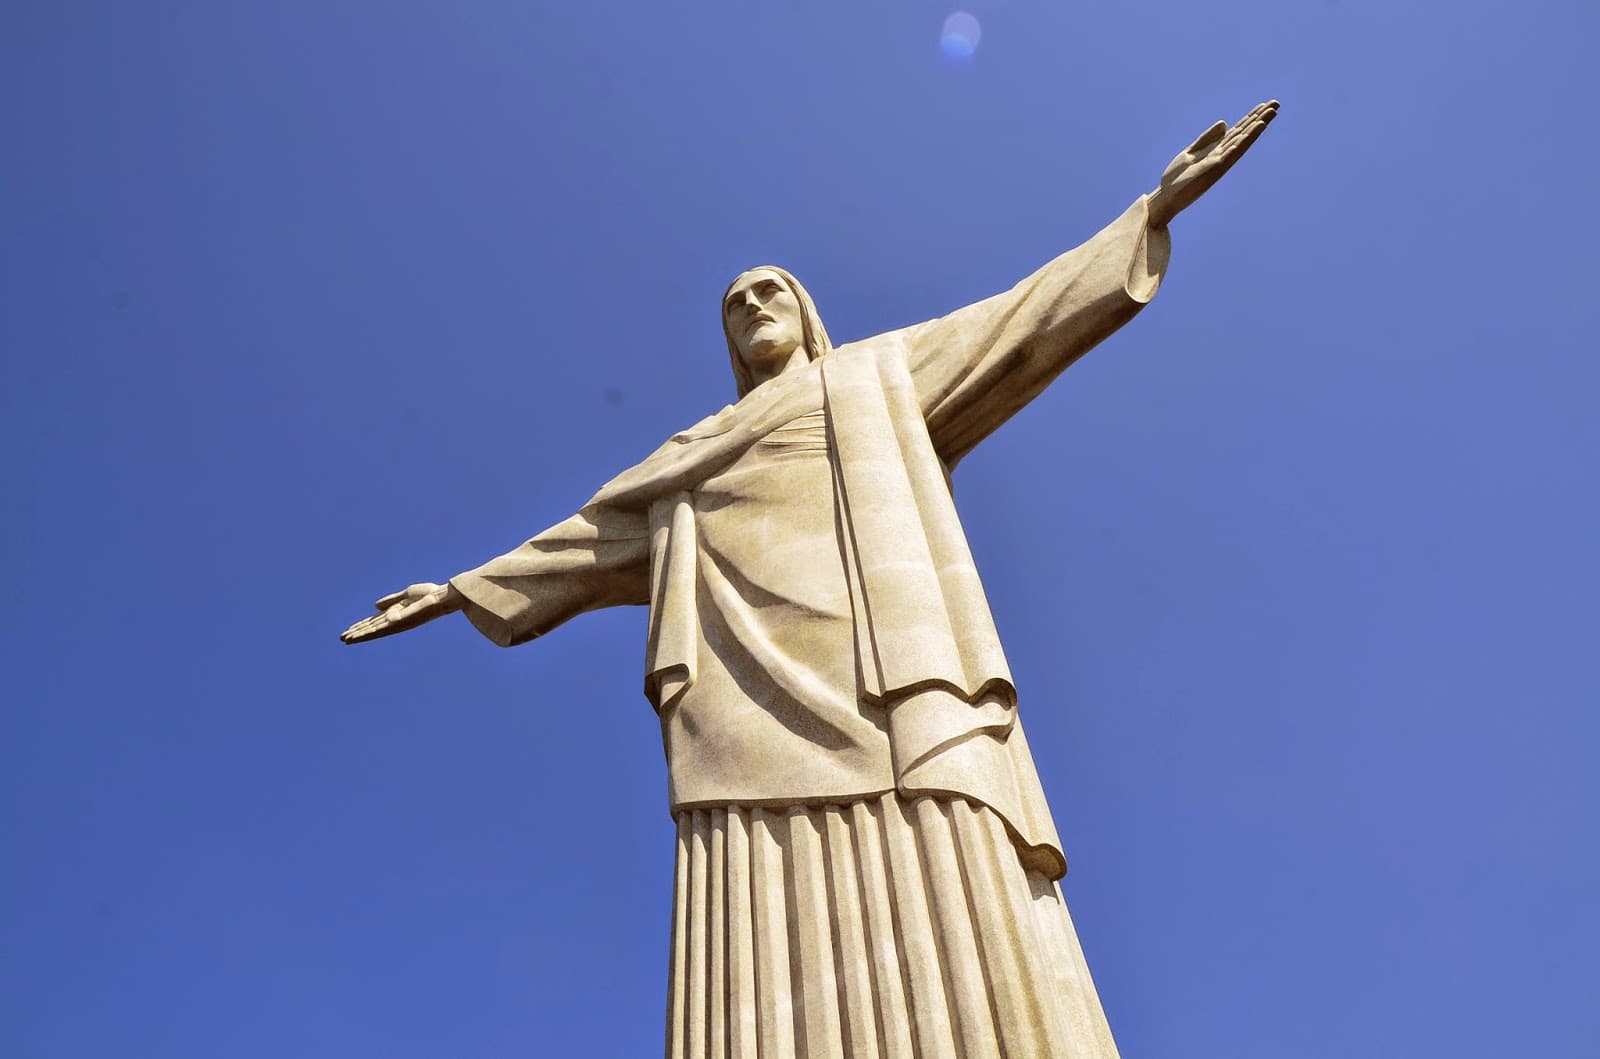 Cristo Redentor at Corcovado in the Tijuca Forest National Park, Rio de Janeiro, Brazil